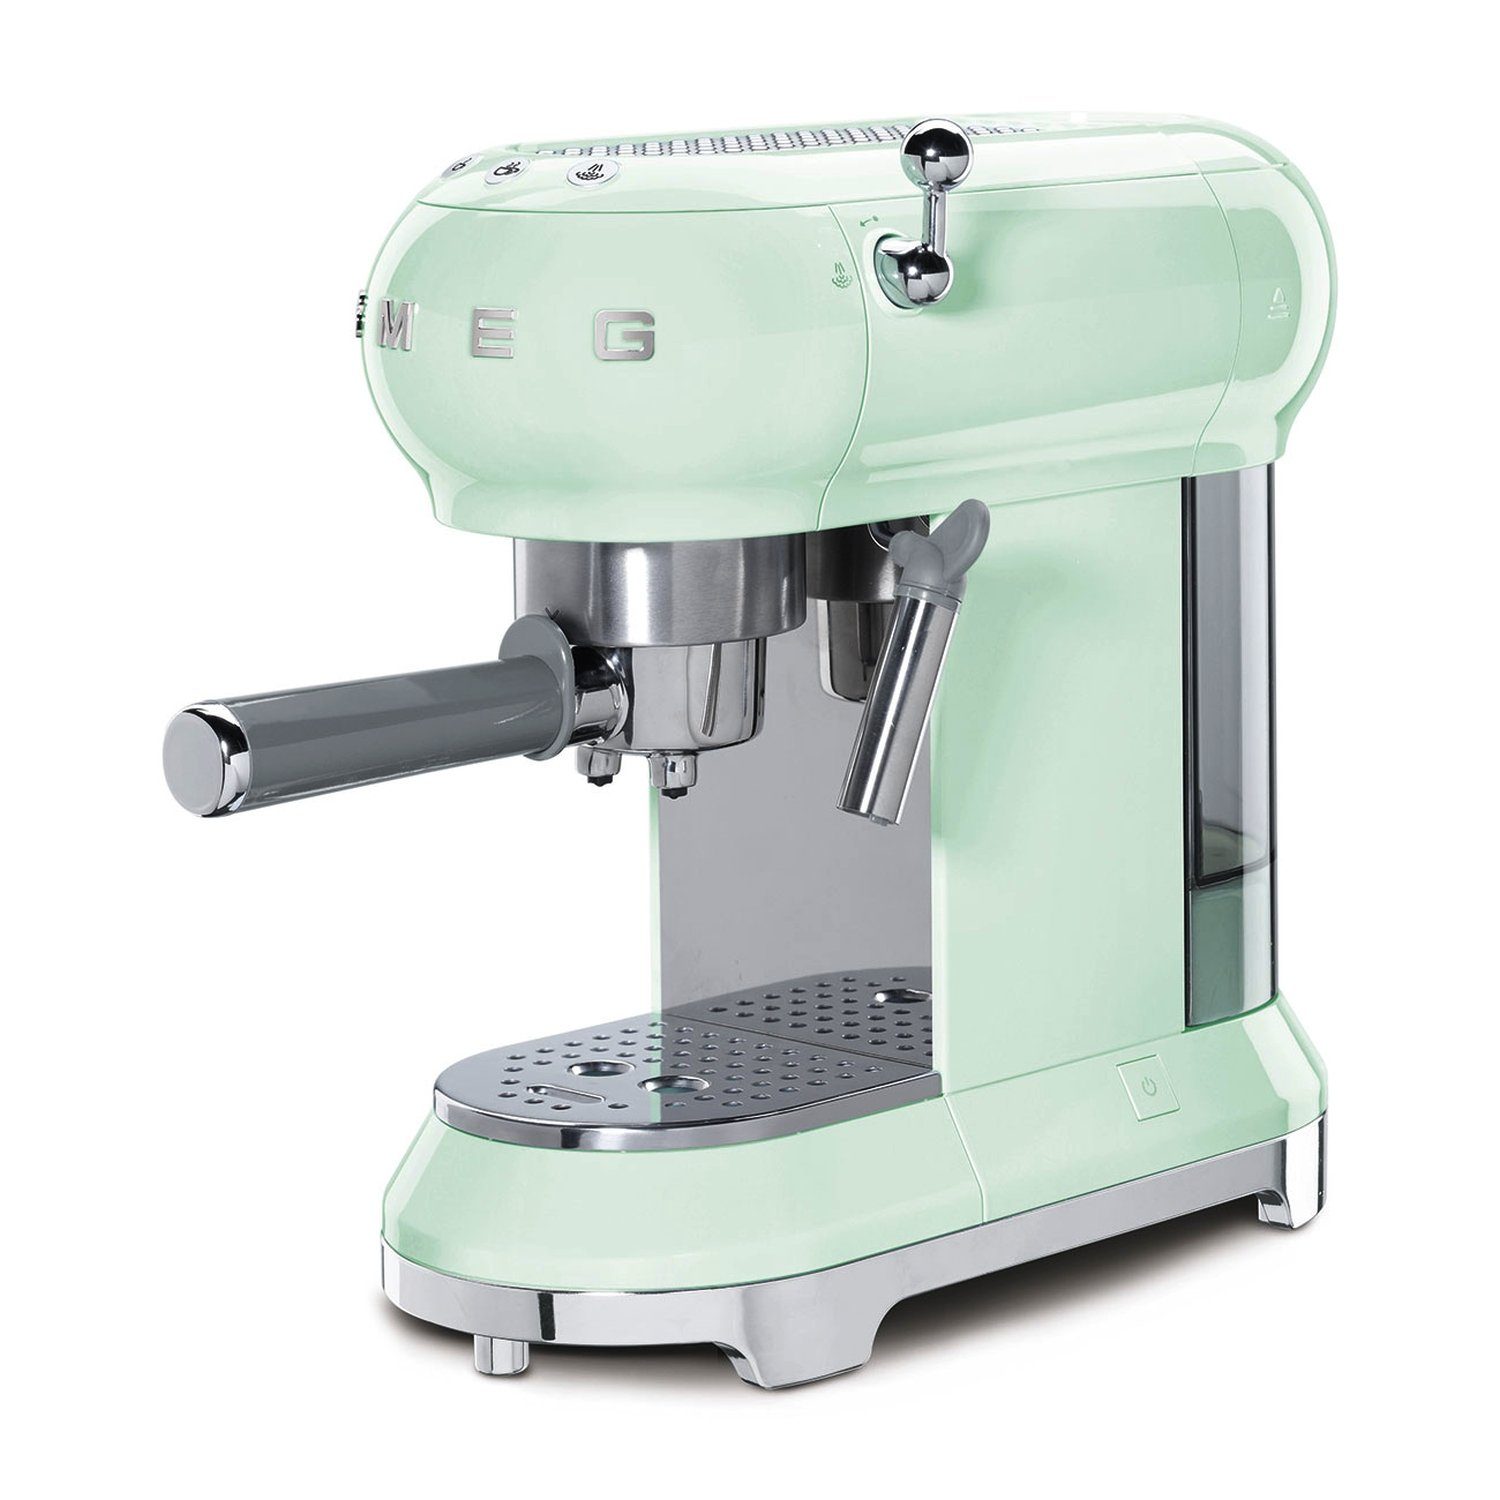 Smeg Espressomaschine SMEG Espressomaschine Siebträgermaschine Kaffeemaschine Auswahl Farbe